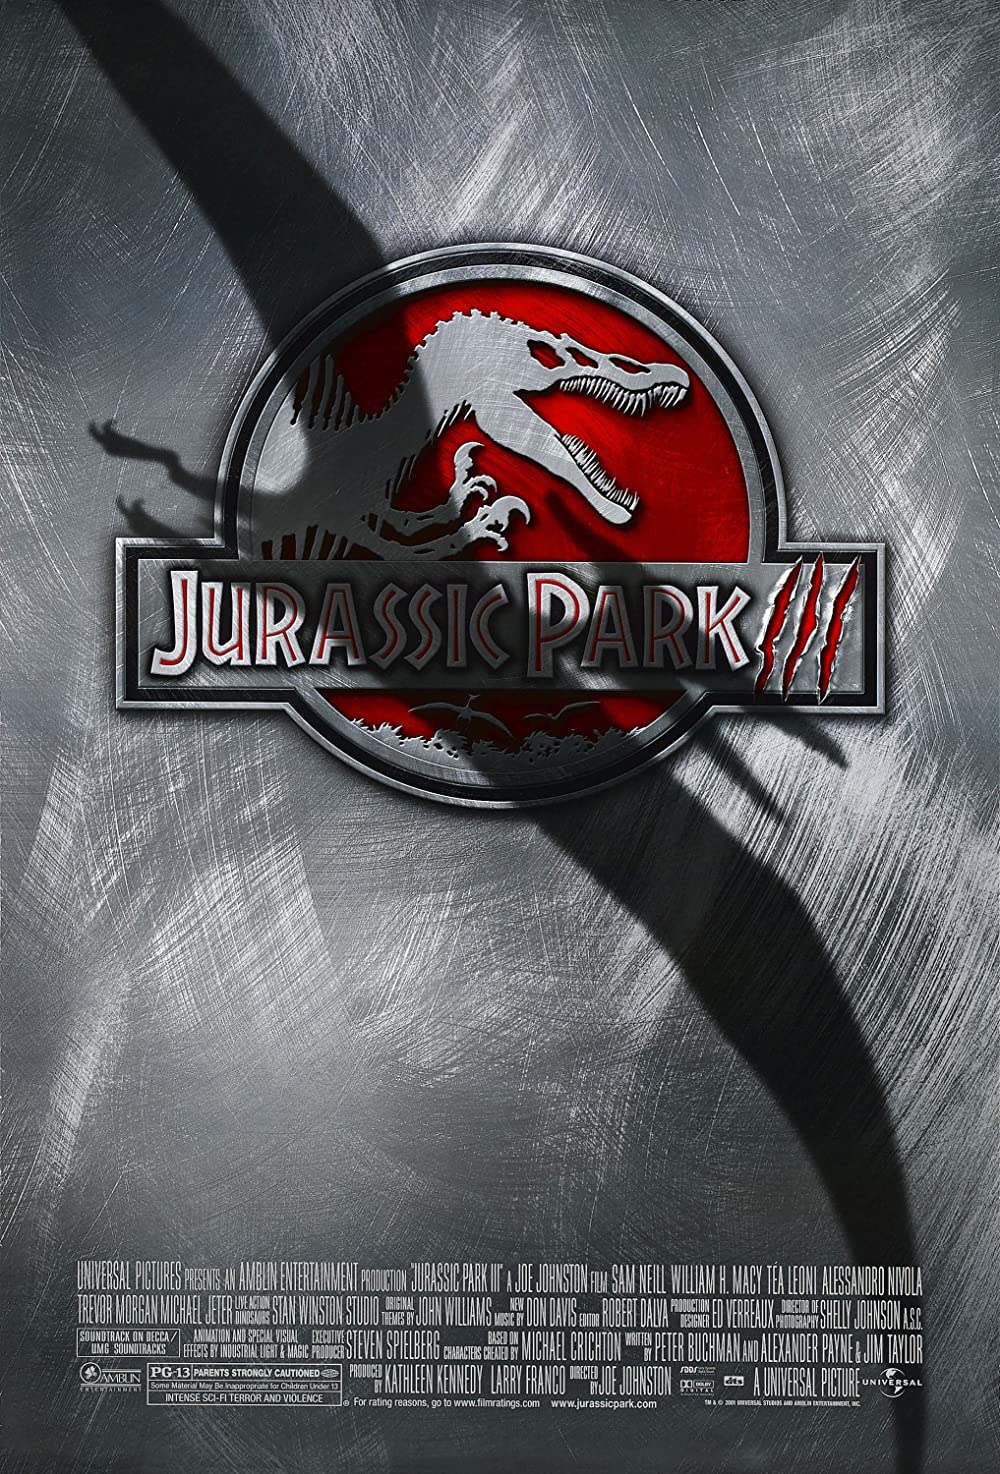 Filmbeschreibung zu Jurassic Park 3